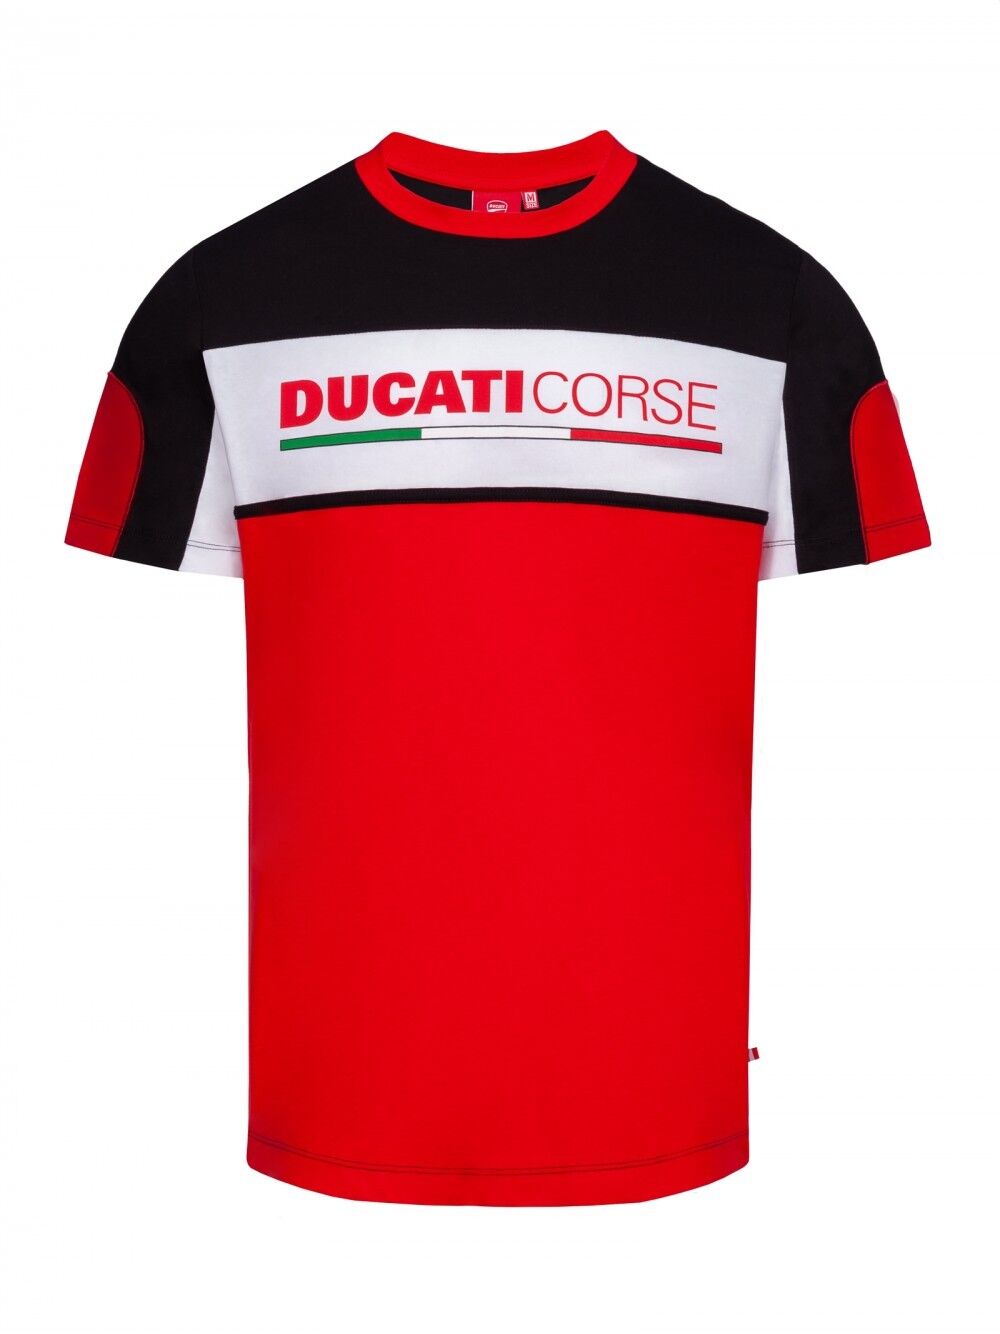 Ducati Corse Official Racing T'Shirt - 18 36006